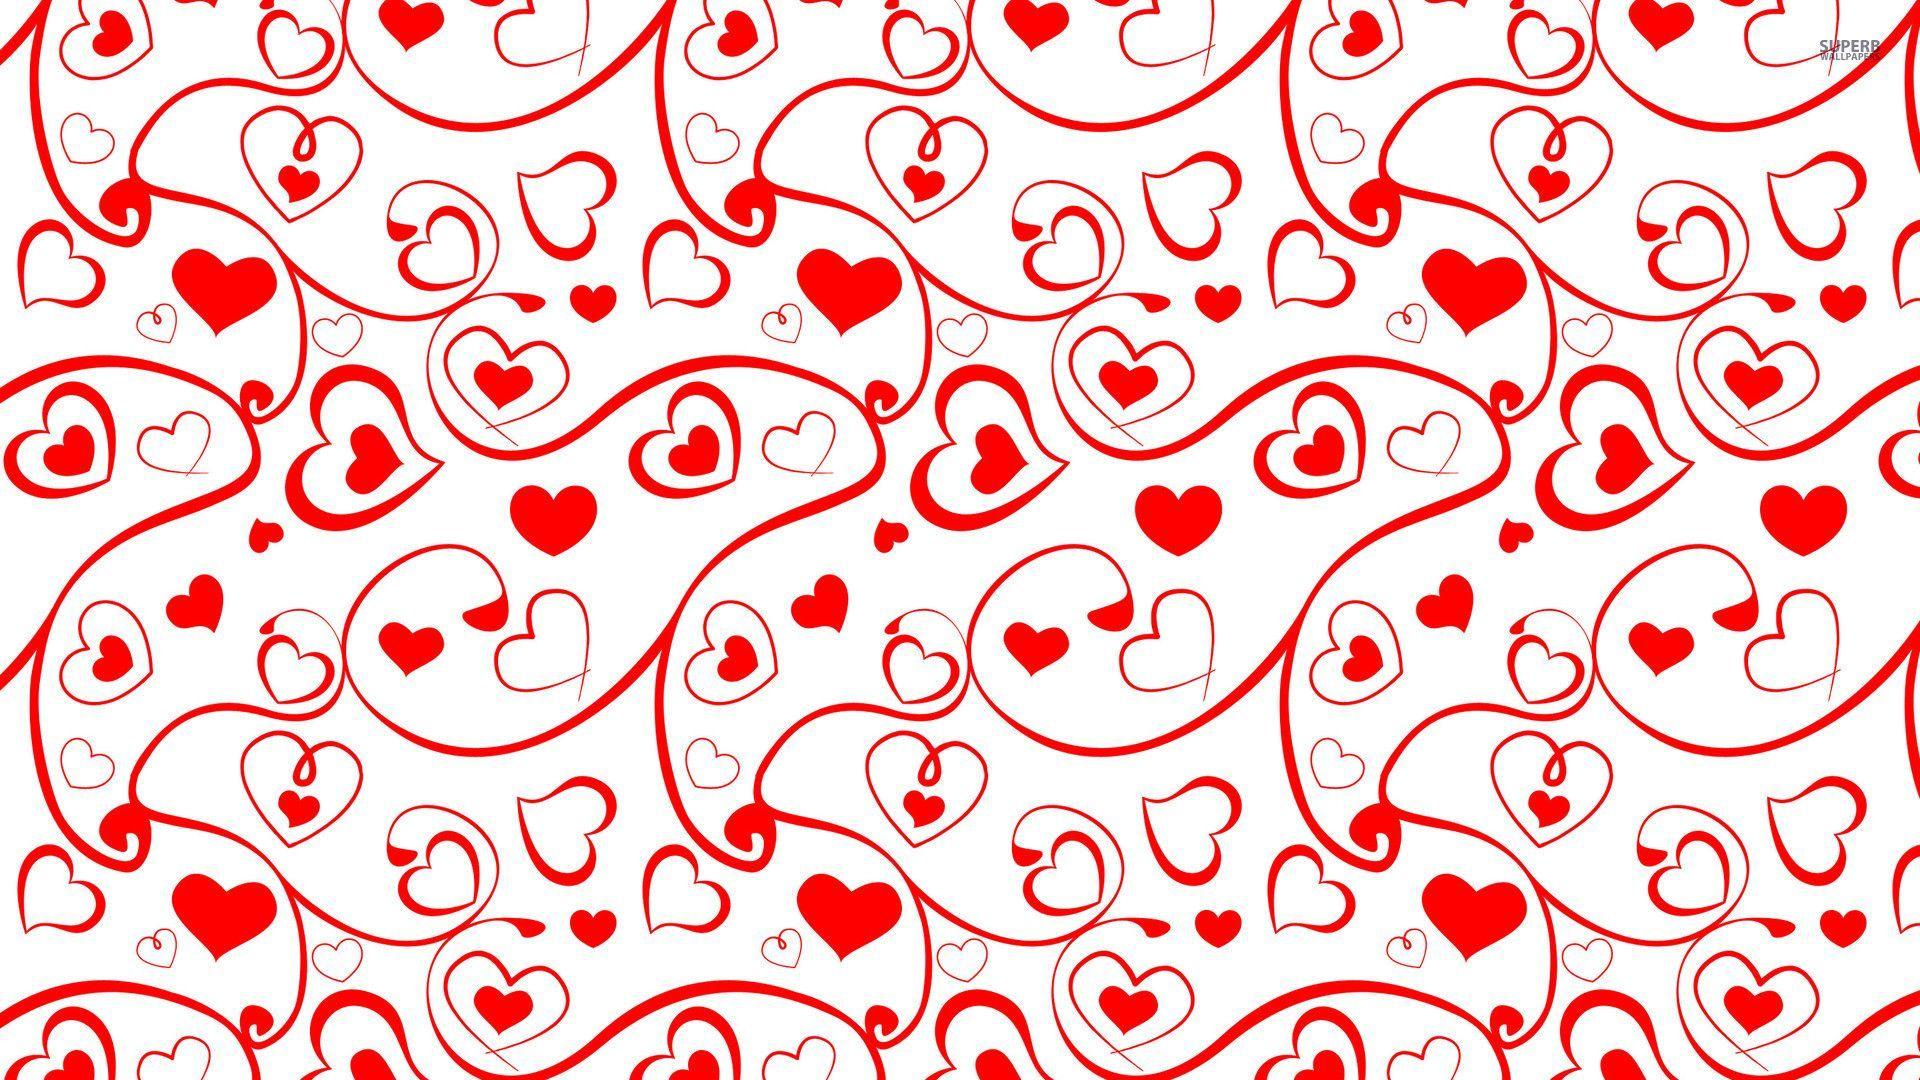 Heart and swirl pattern wallpaper wallpaper - #